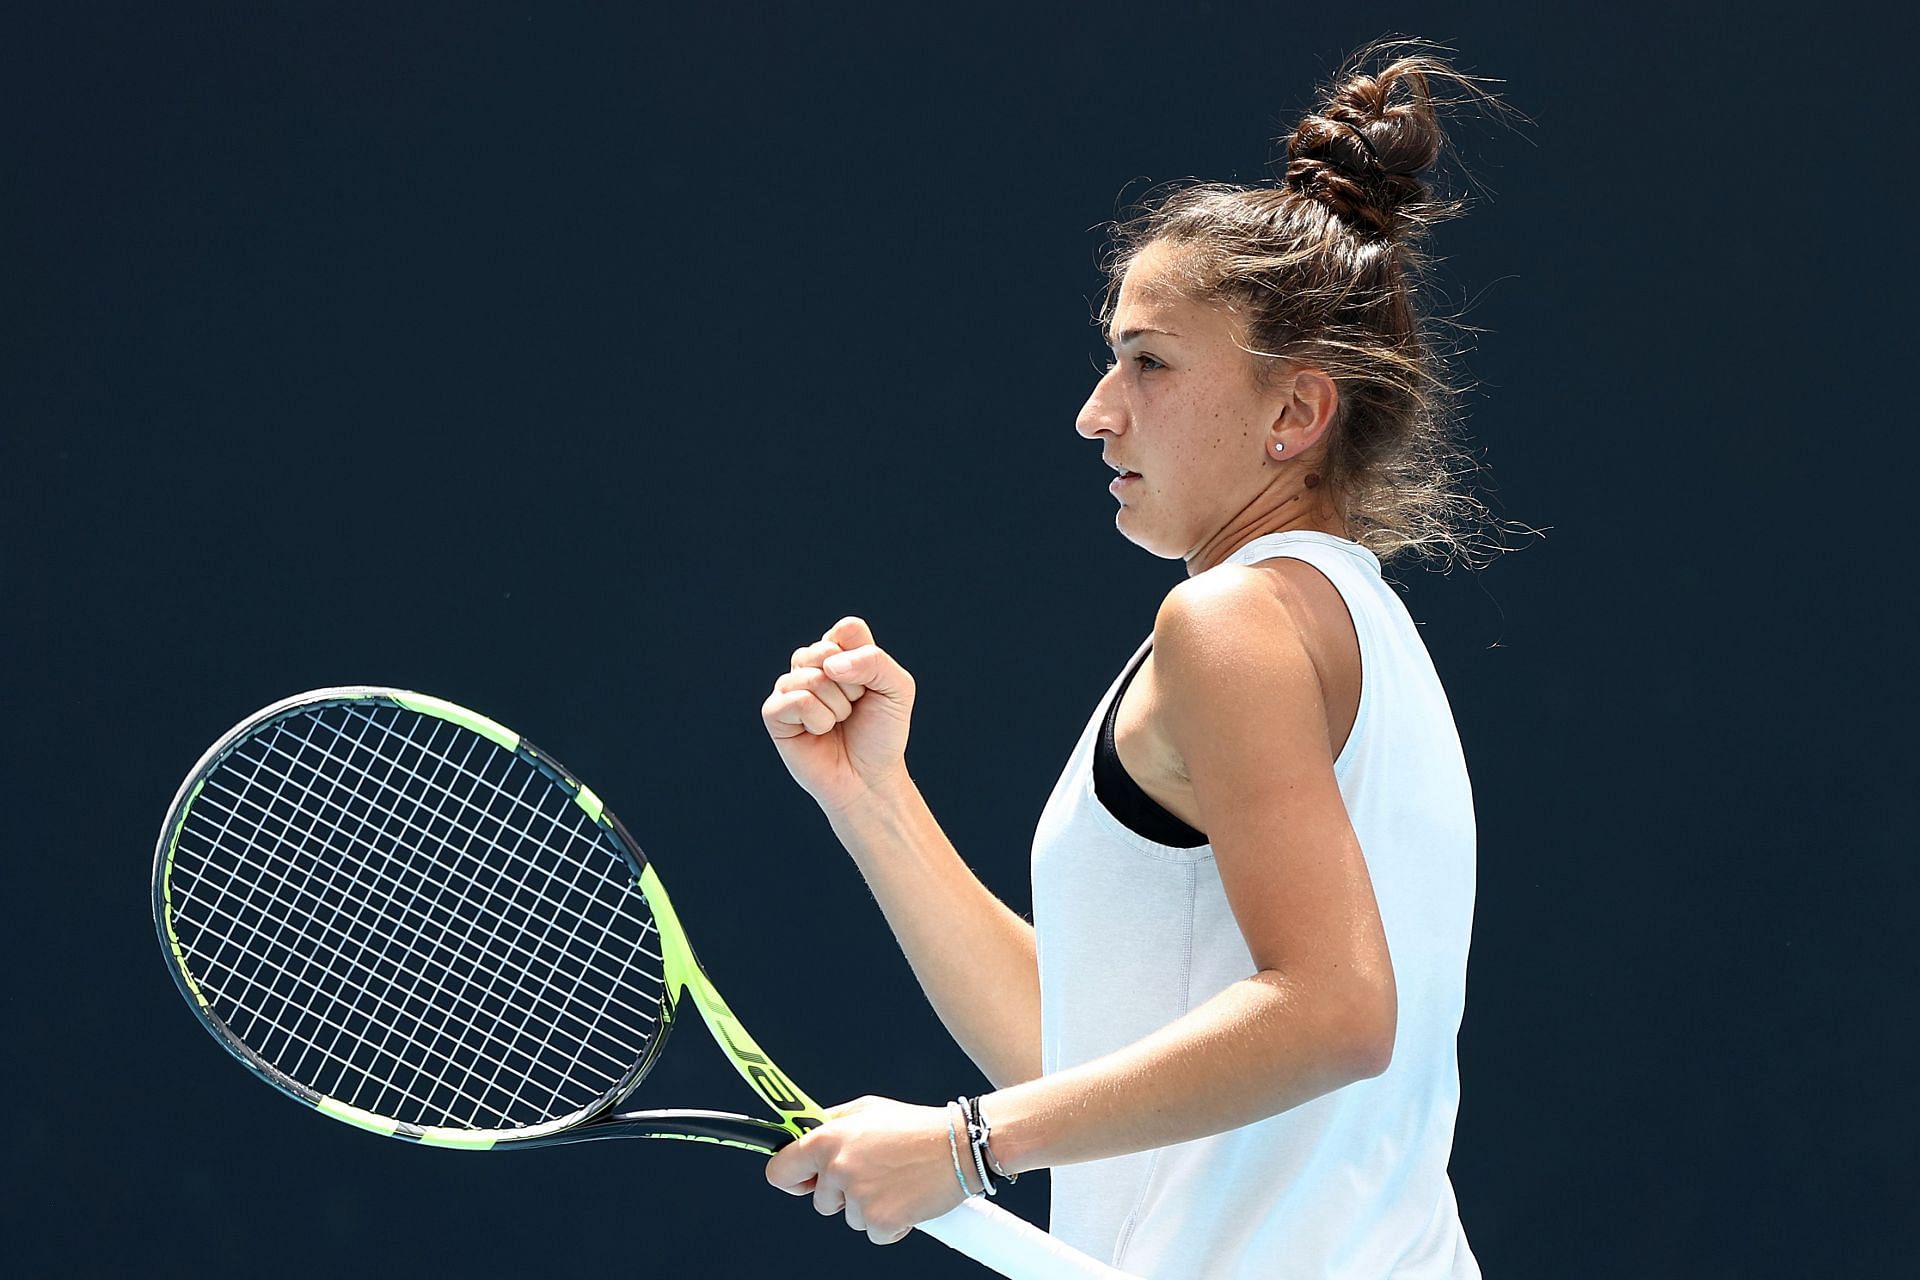 Emina Bektas in action at the 2022 Australian Open